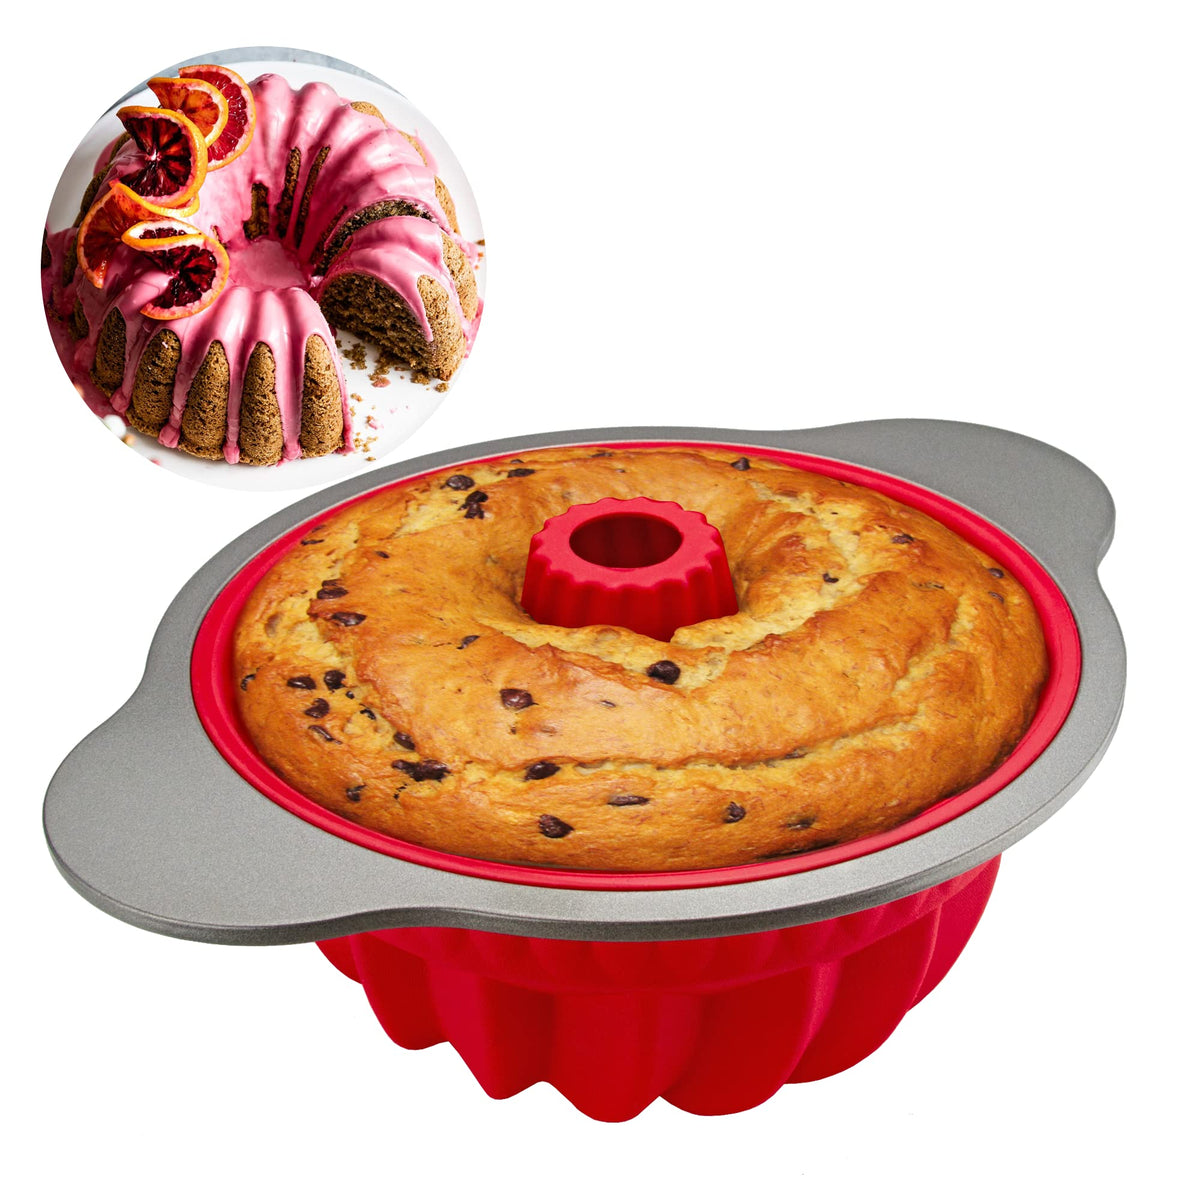 Silicone Bakeware Set | 3-Piece Professional Non-Stick Silicone Baking Set by Boxiki Kitchen | Includes Round Cake Mold Pan, Square Cake Mold Pan